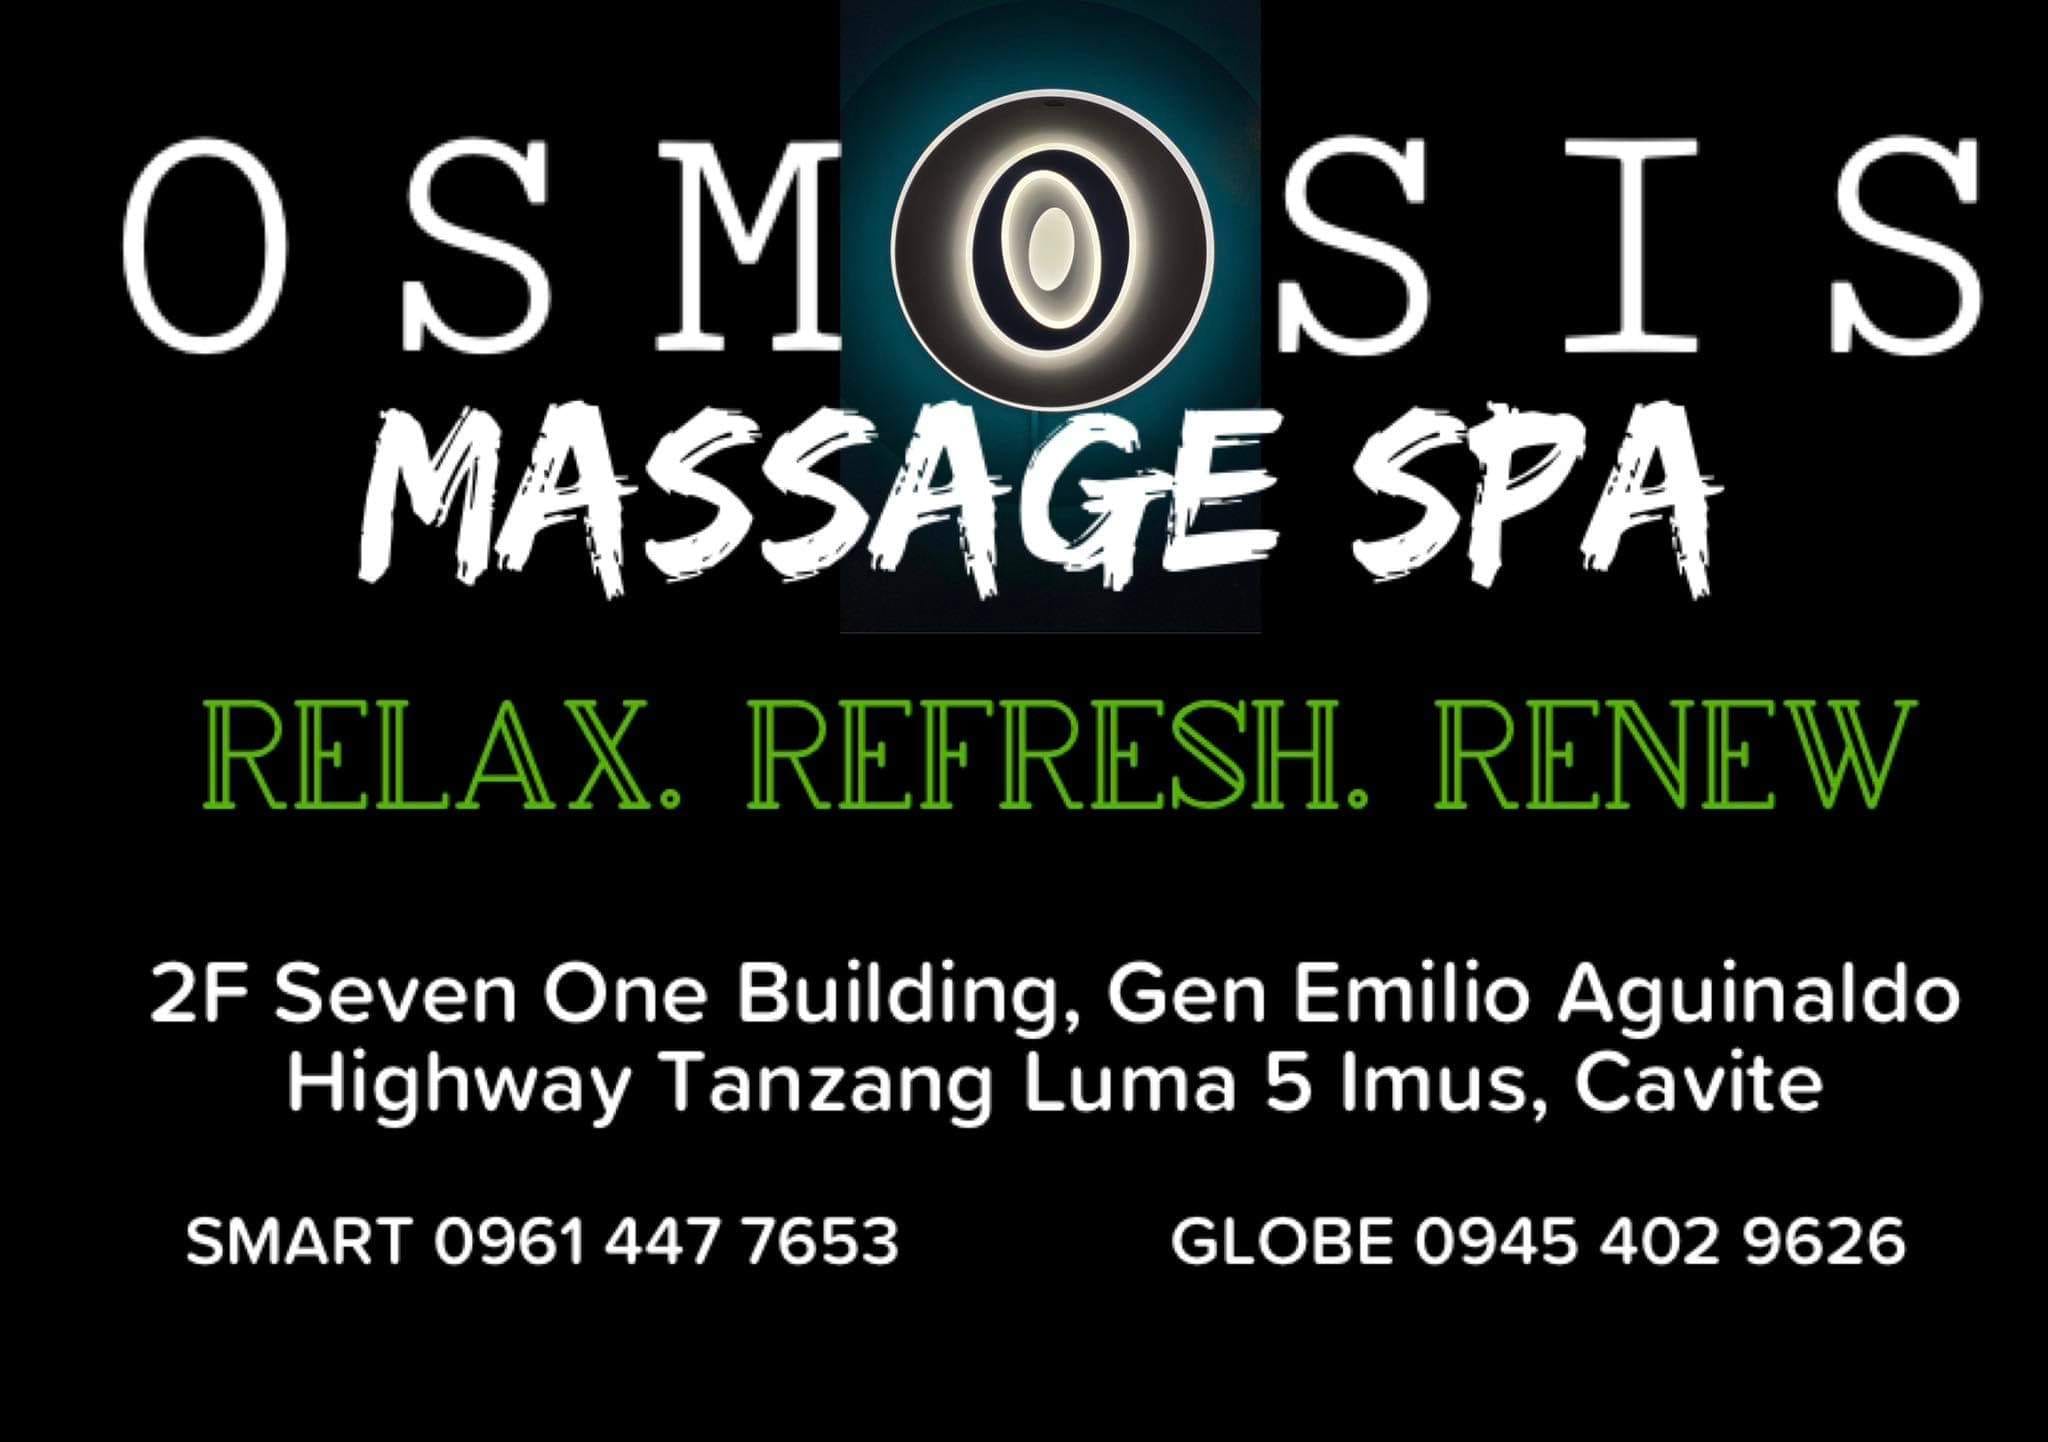 osmosis-massage-spa-imus-cavite-male-female-services-philippines-image.jpg